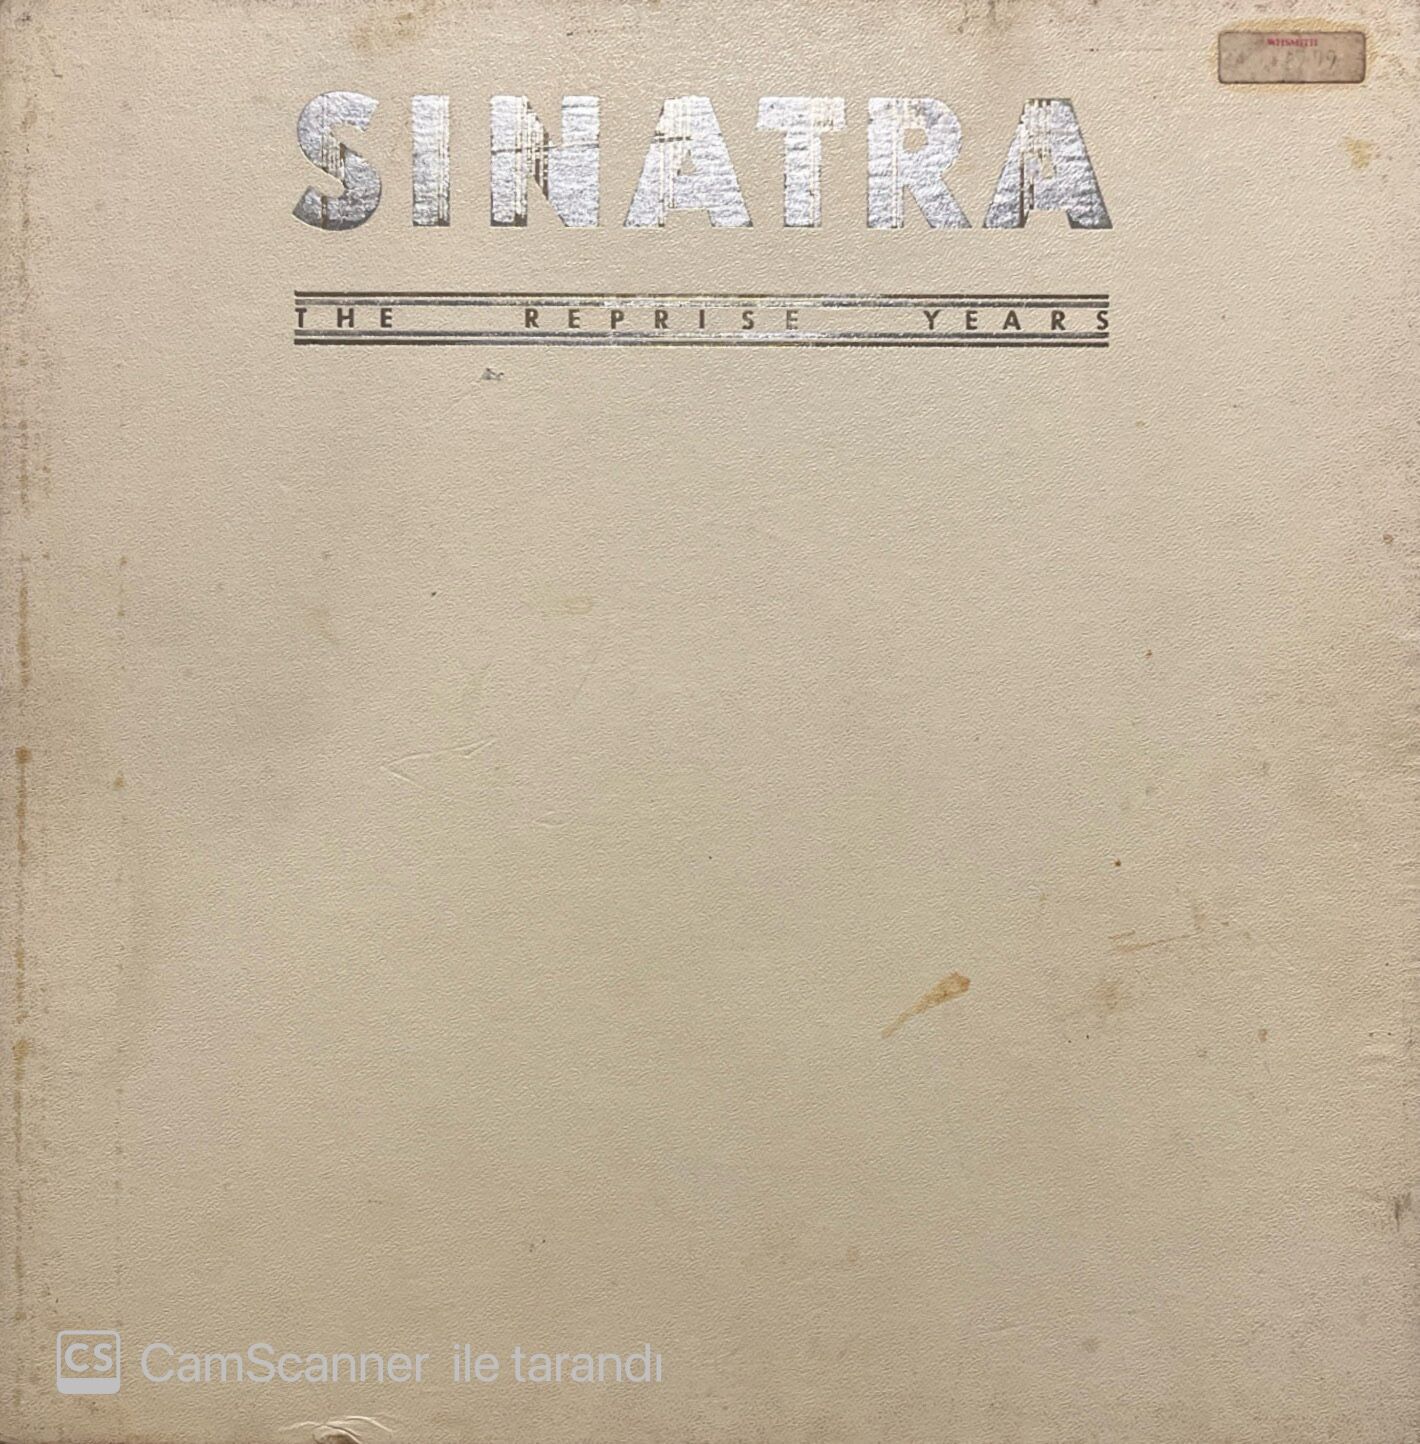 Frank Sinatra The Reprise Years 4 LP Box Set Plak